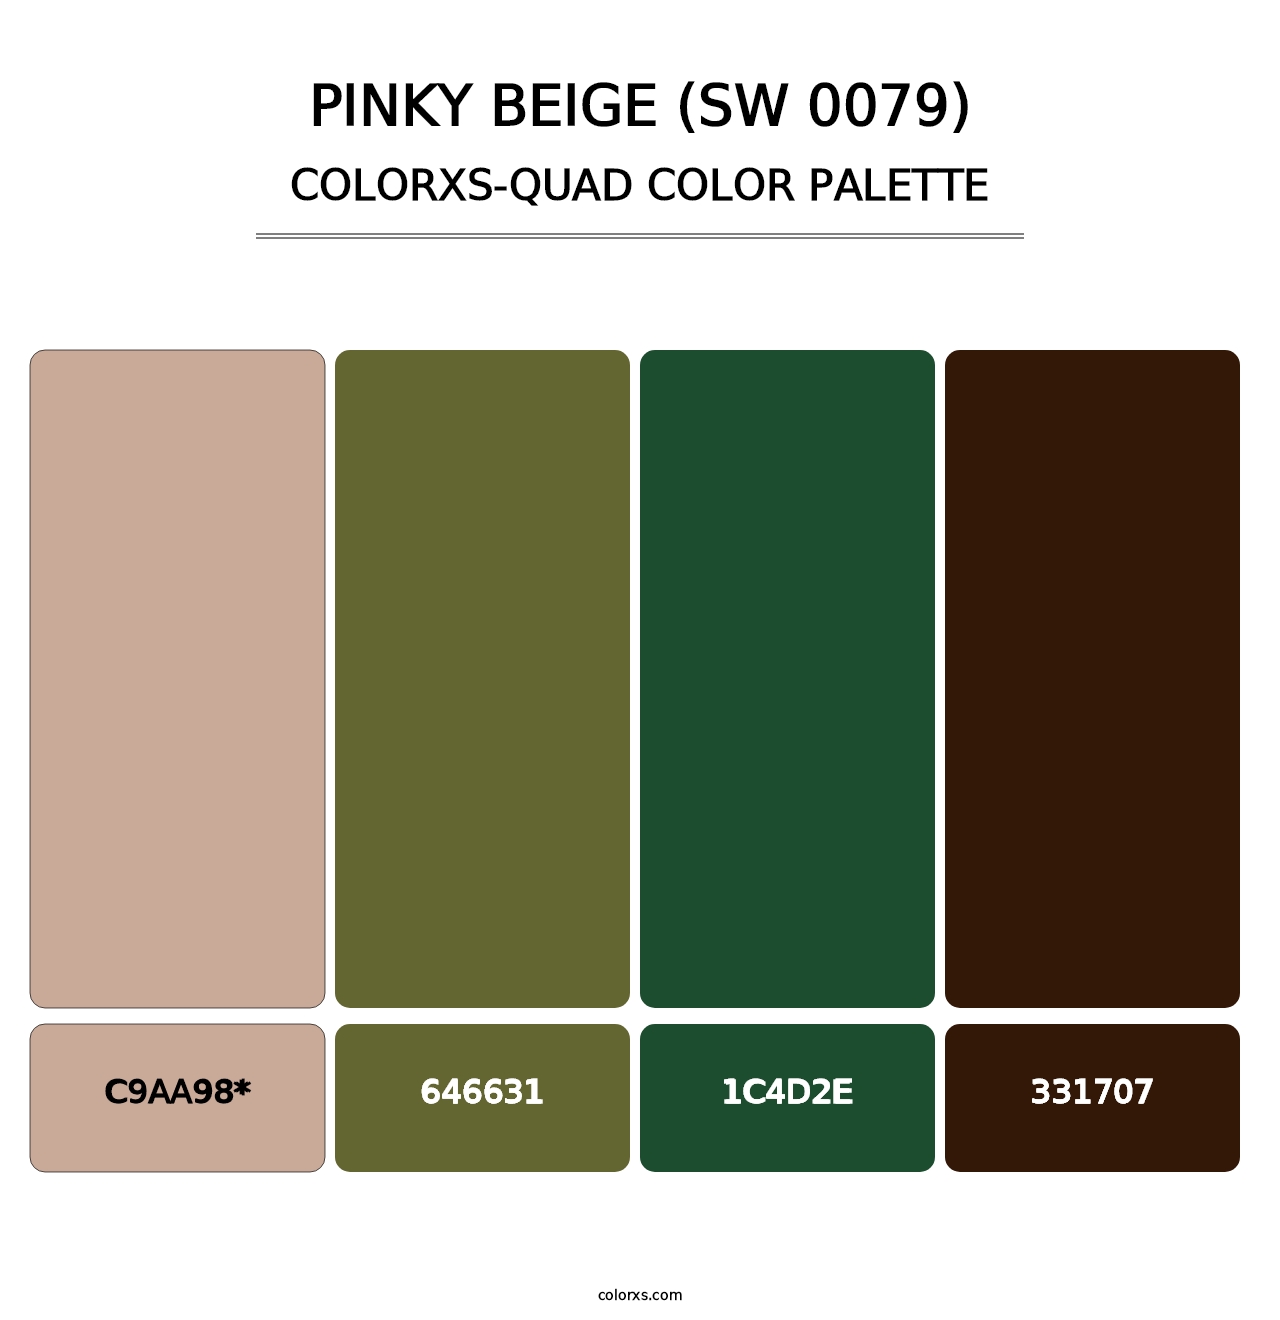 Pinky Beige (SW 0079) - Colorxs Quad Palette